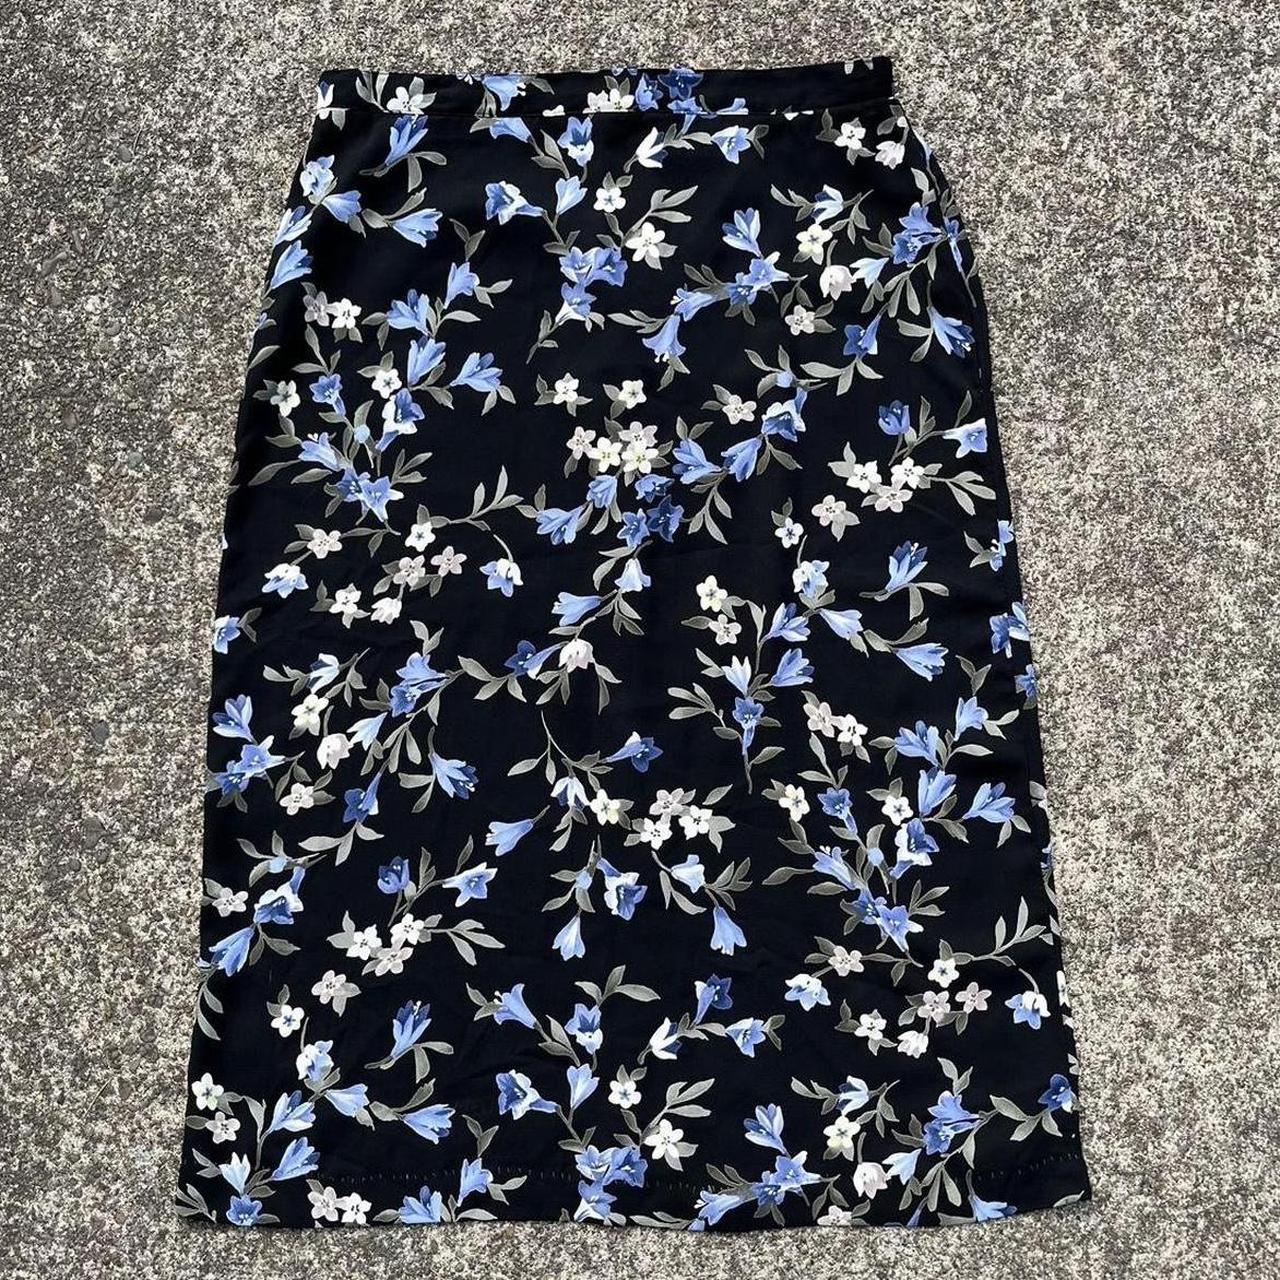 90s floral print midi/maxi skirt 🦋 black skirt with... - Depop